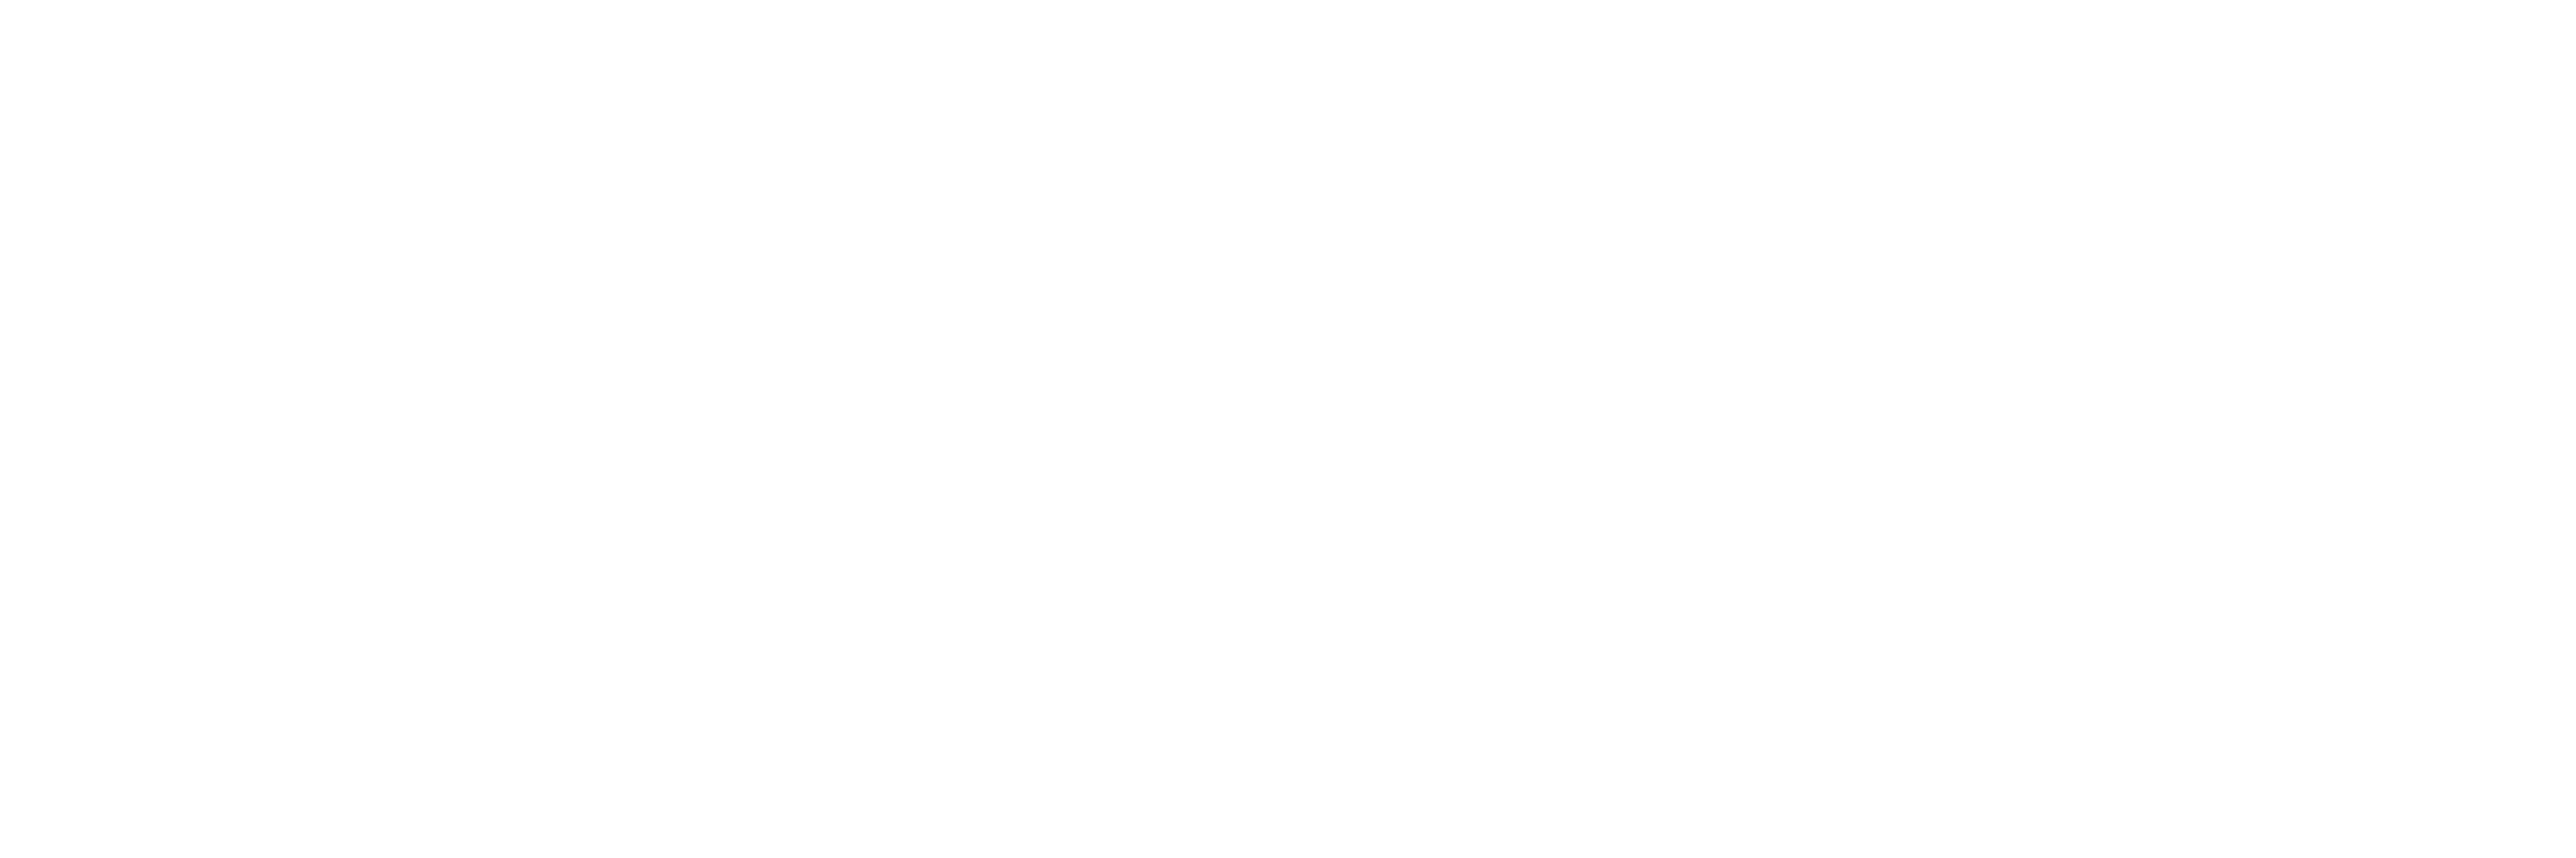 Building Text